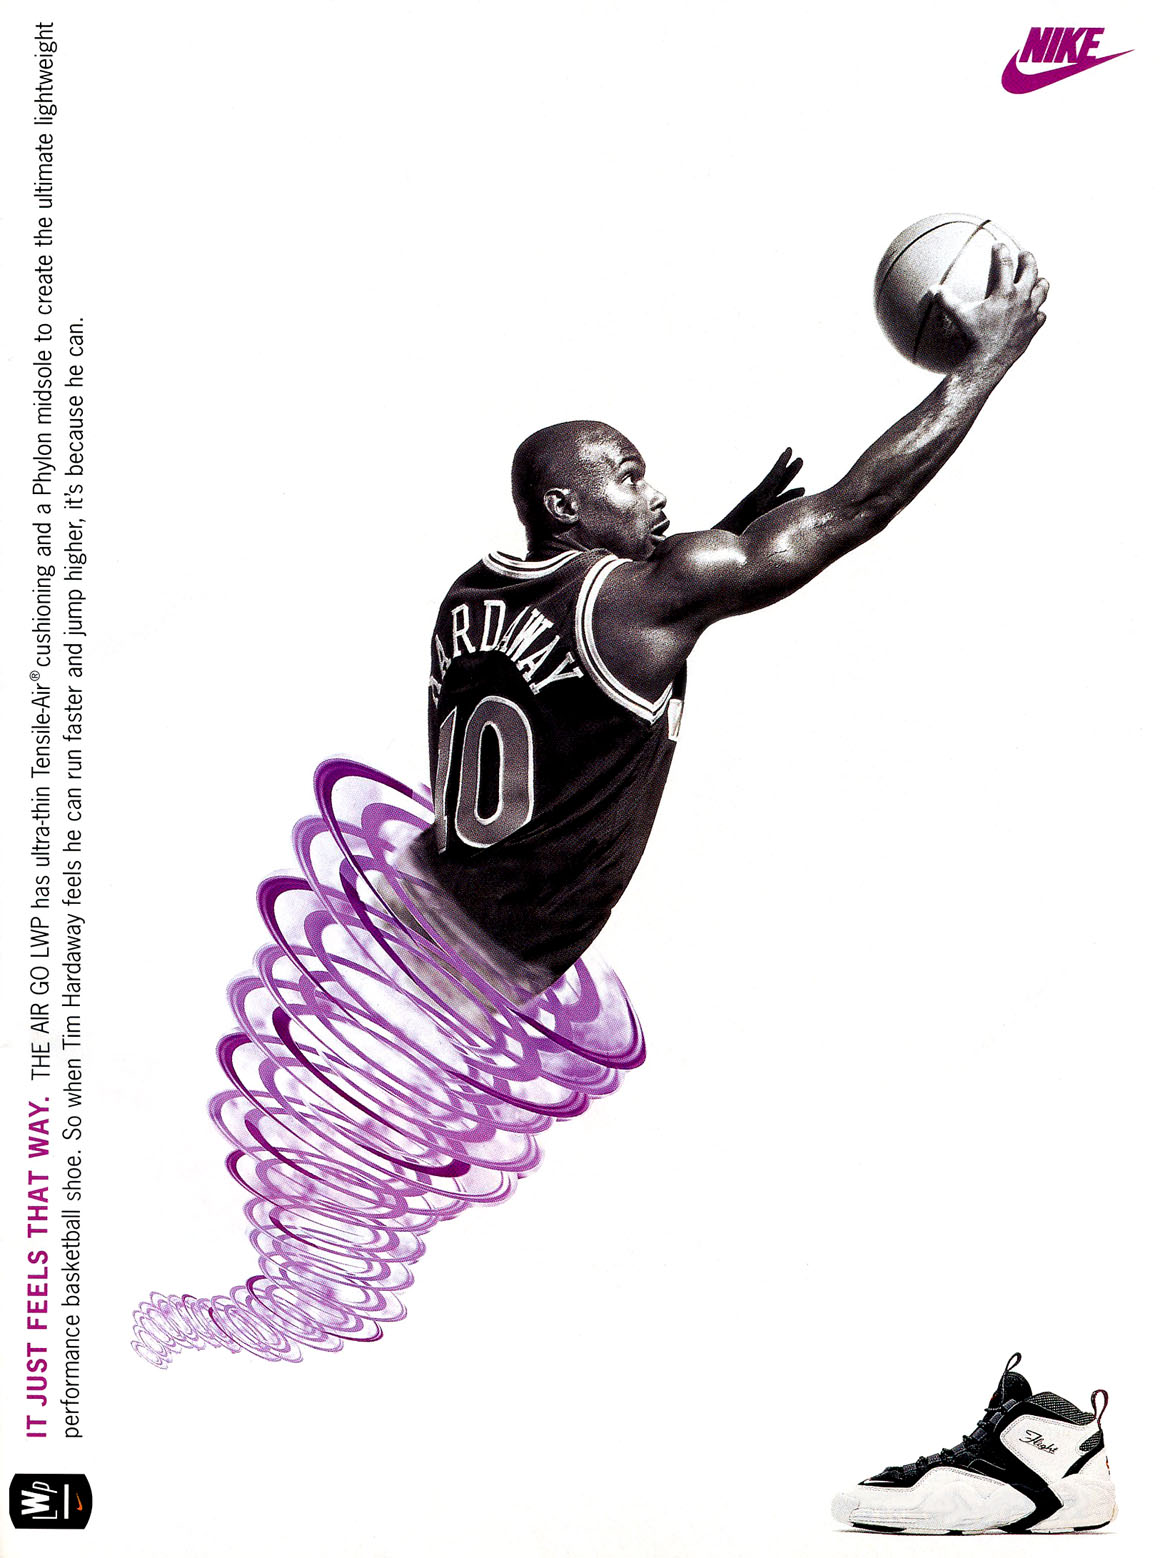 Nike Air Go LWP Tim hardaway Ad 1995 .jpg